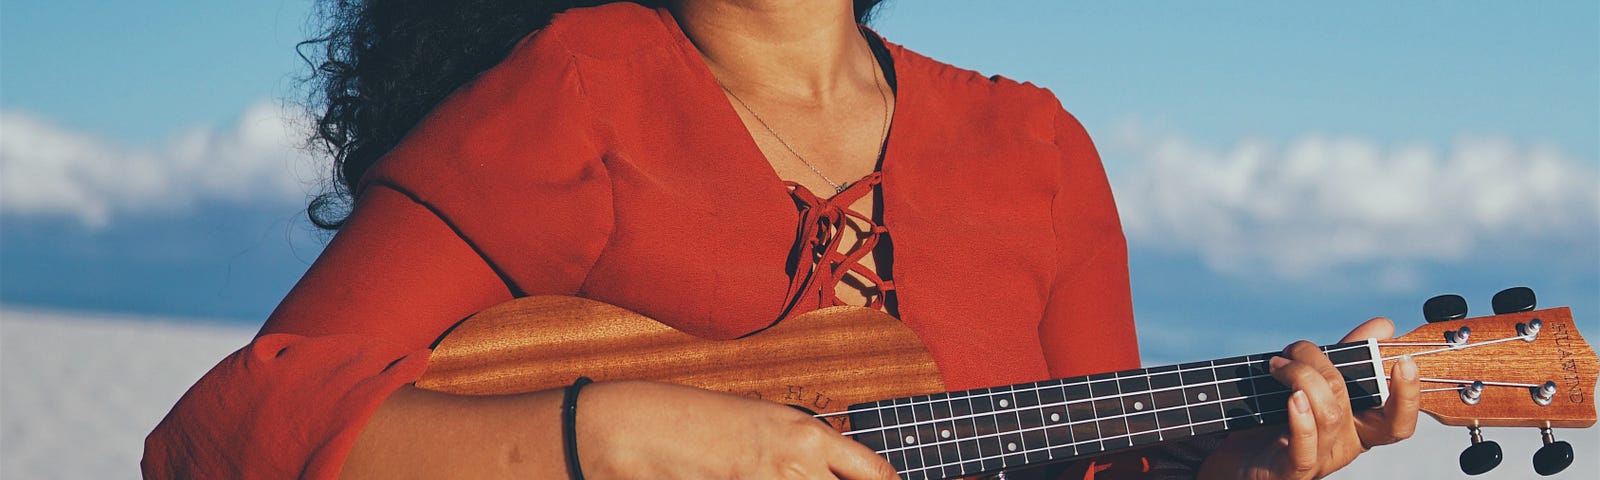 A woman playing the ukulele on a beach.